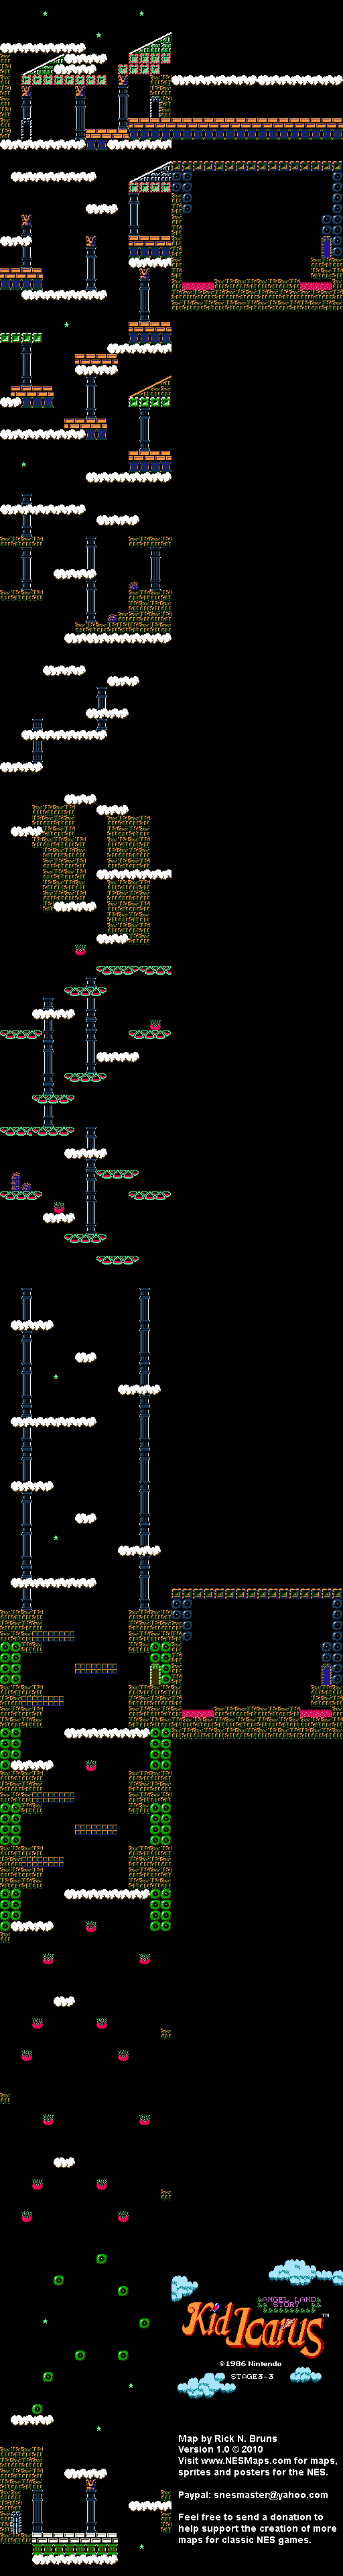 Kid Icarus - Stage 3-3 - NES Map BG